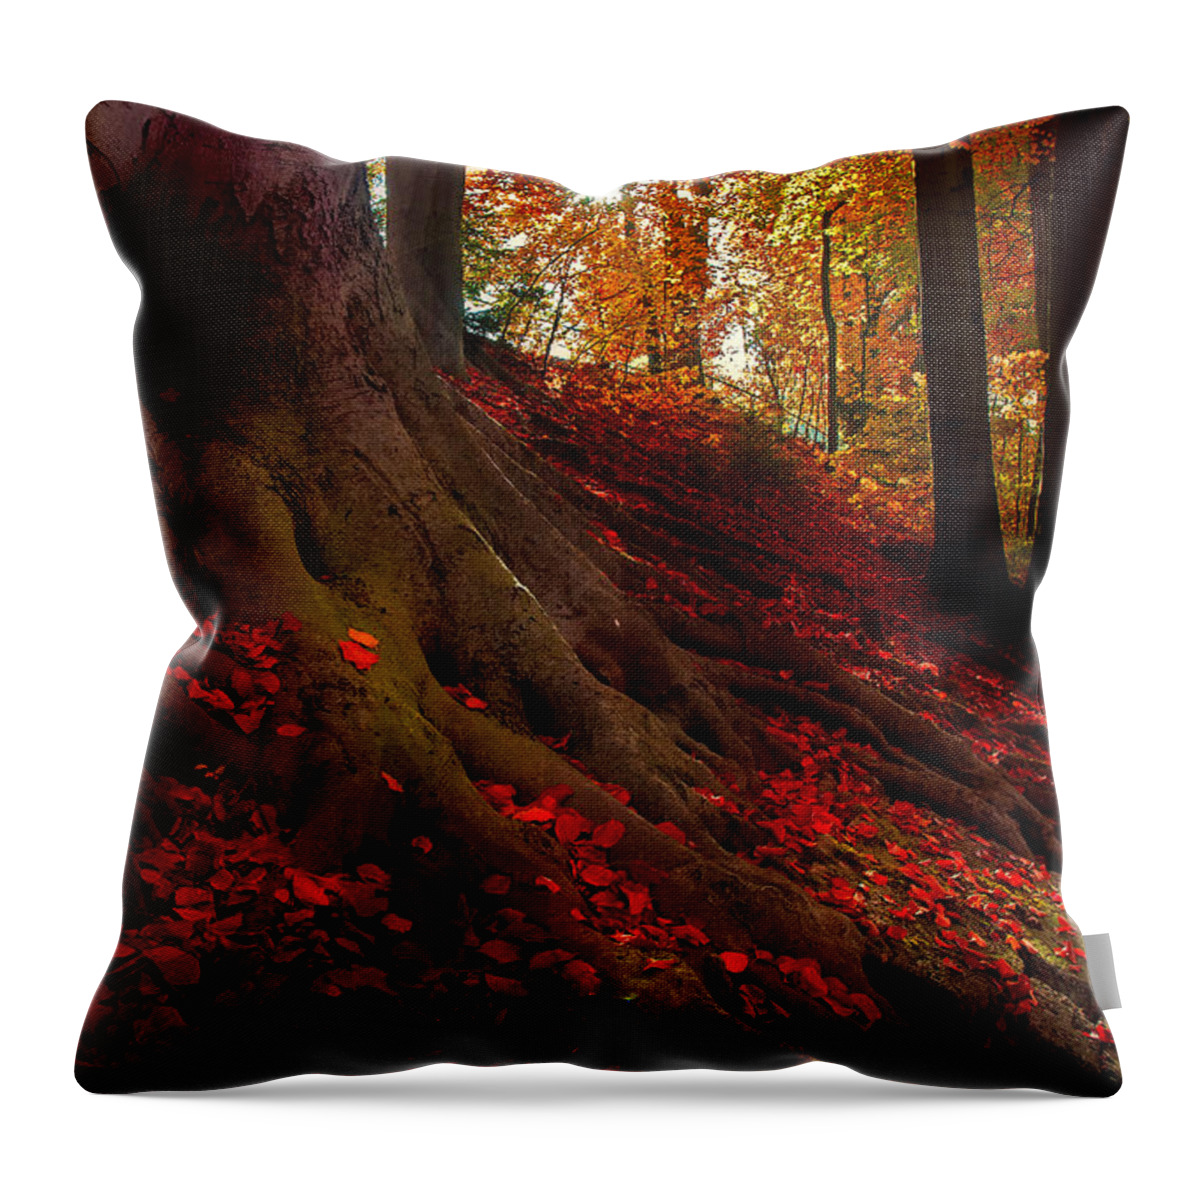 Autumn Throw Pillow featuring the photograph Autumn Light by Hannes Cmarits